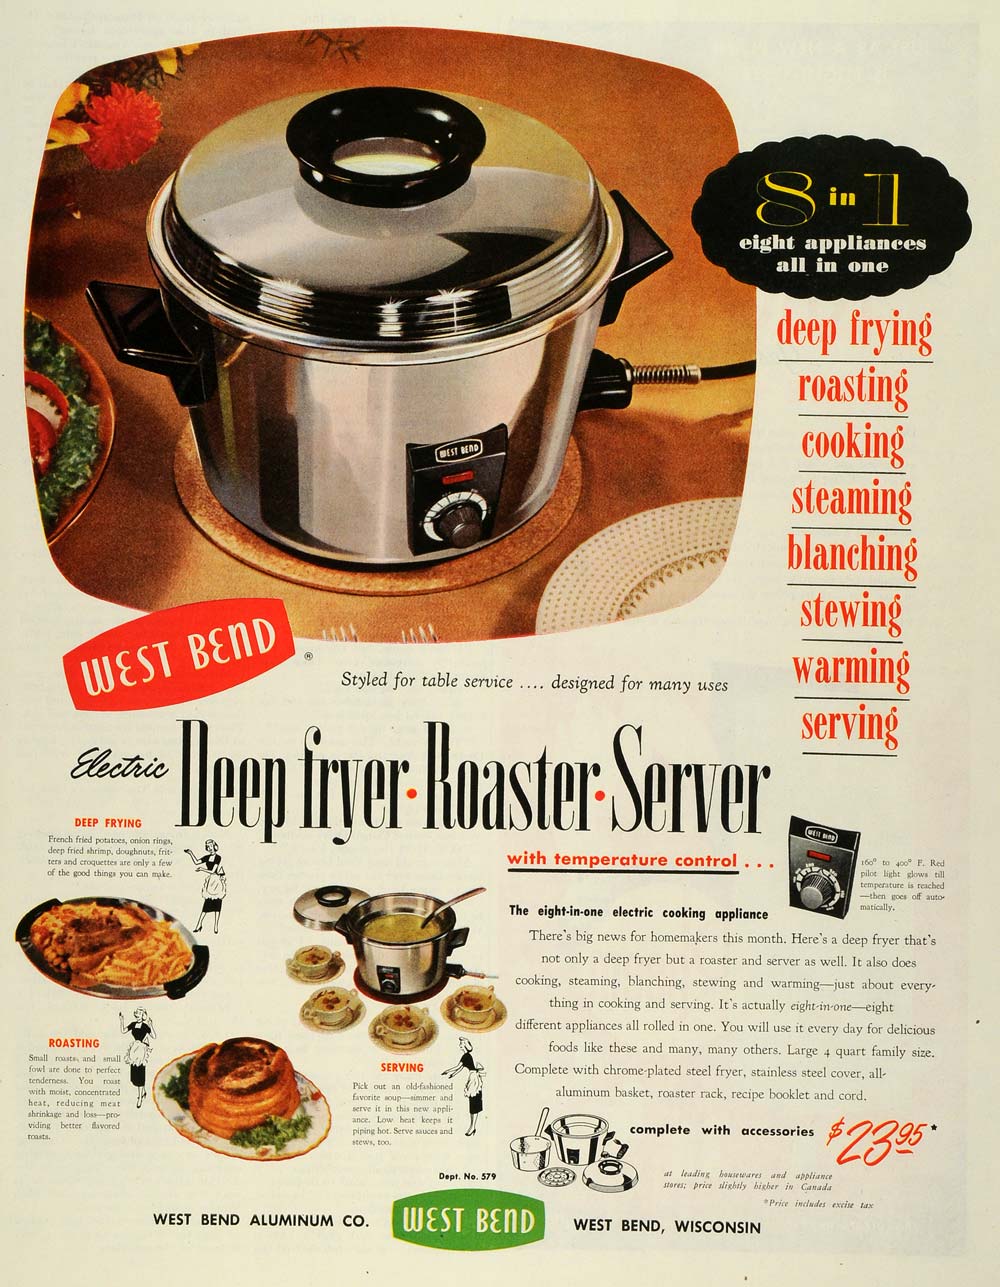 1953 Ad West Bend Aluminum Co Deep Fryer Roaster Server Cookware Wisconsin SEP6